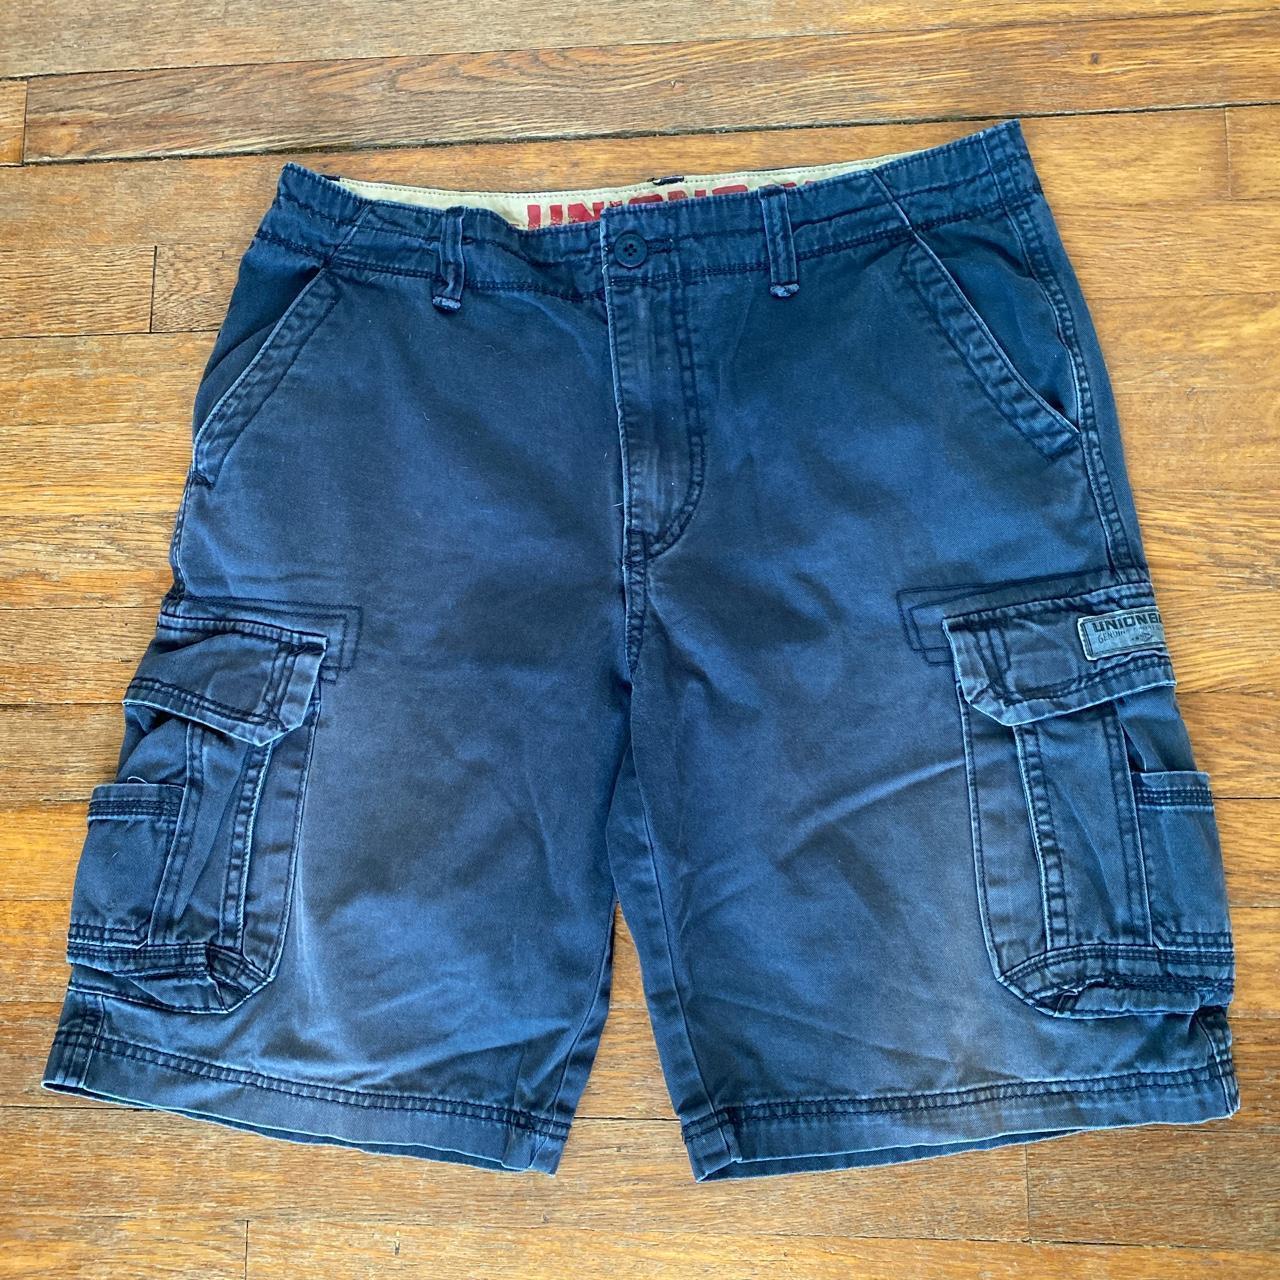 UnionBay faded navy blue cargo shorts size 36. No... - Depop